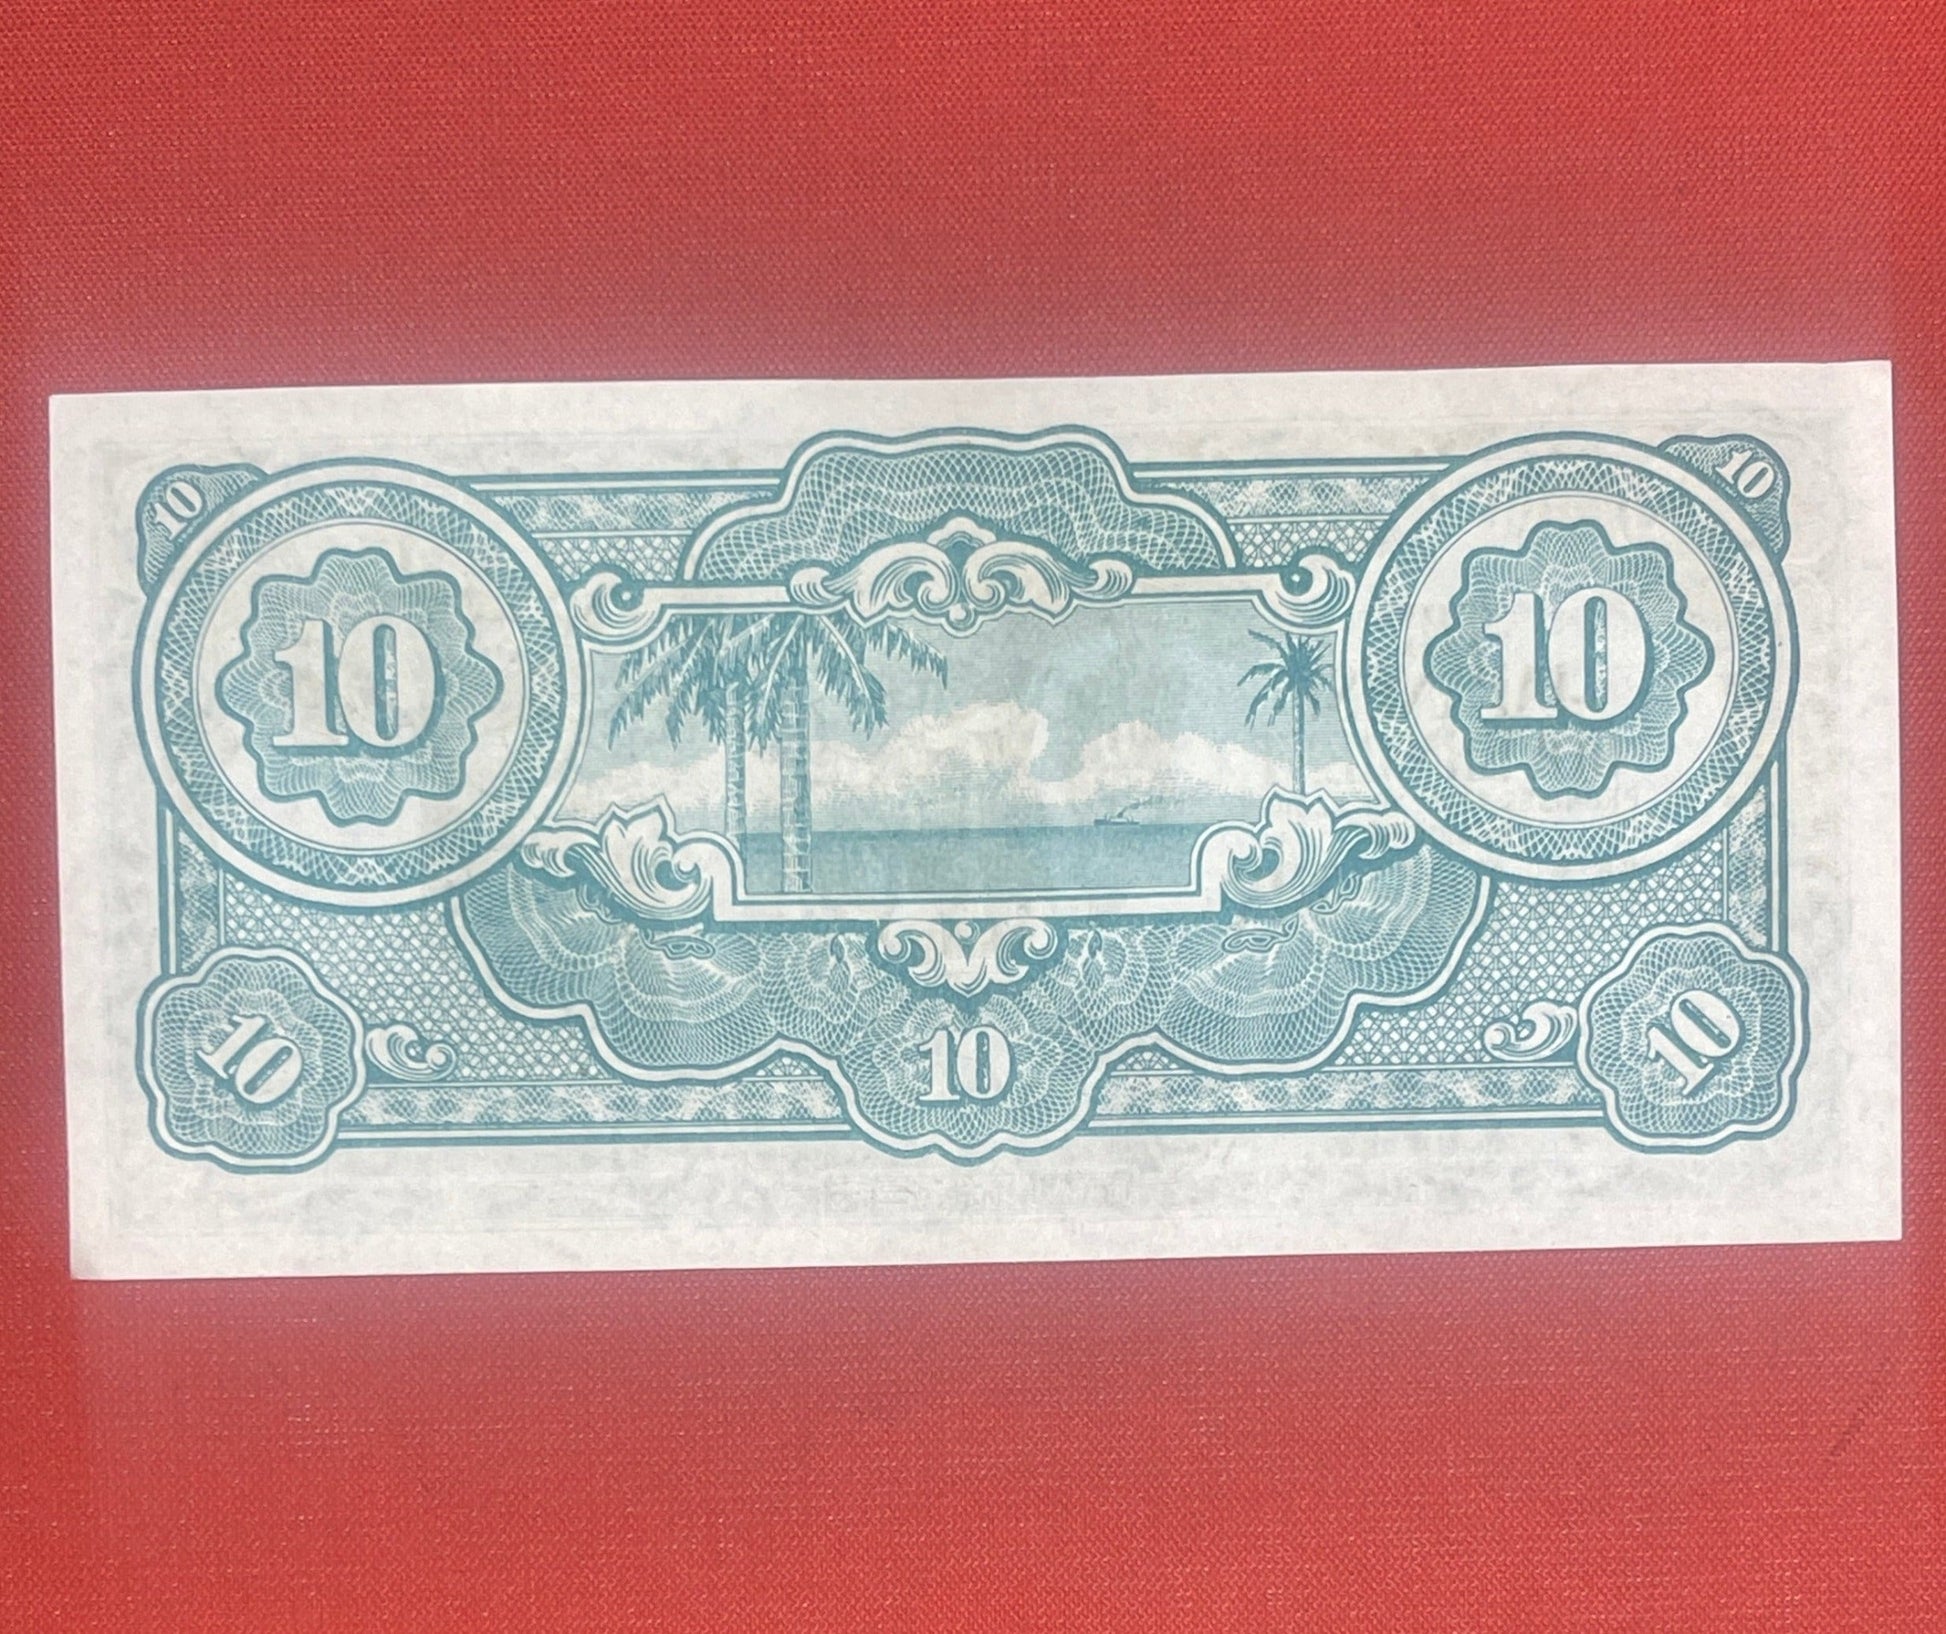 Original Japanese Government 10 Dollar Paper Money WWII Era Philippines  Occupation money.